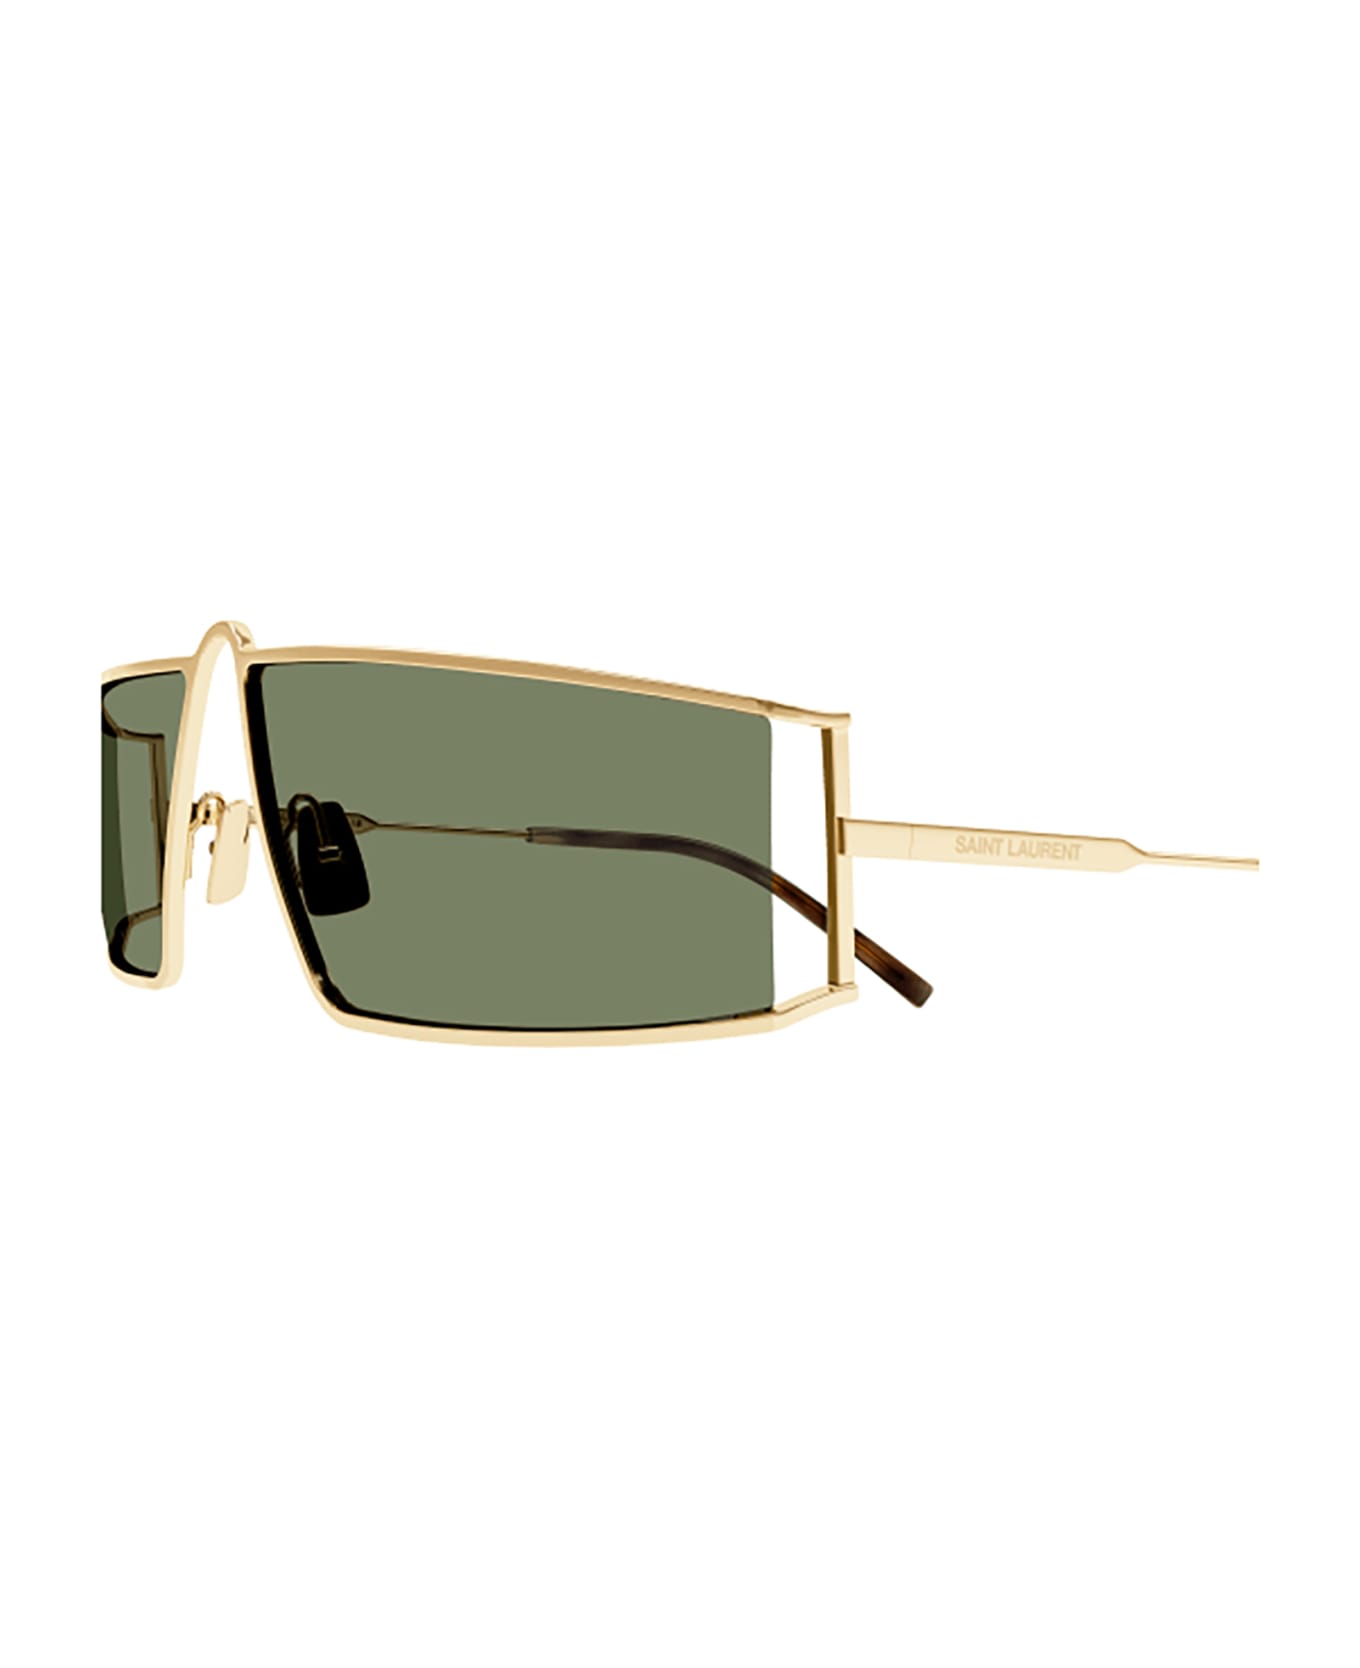 Saint Laurent Eyewear SL 606 Sunglasses - Gold Gold Green